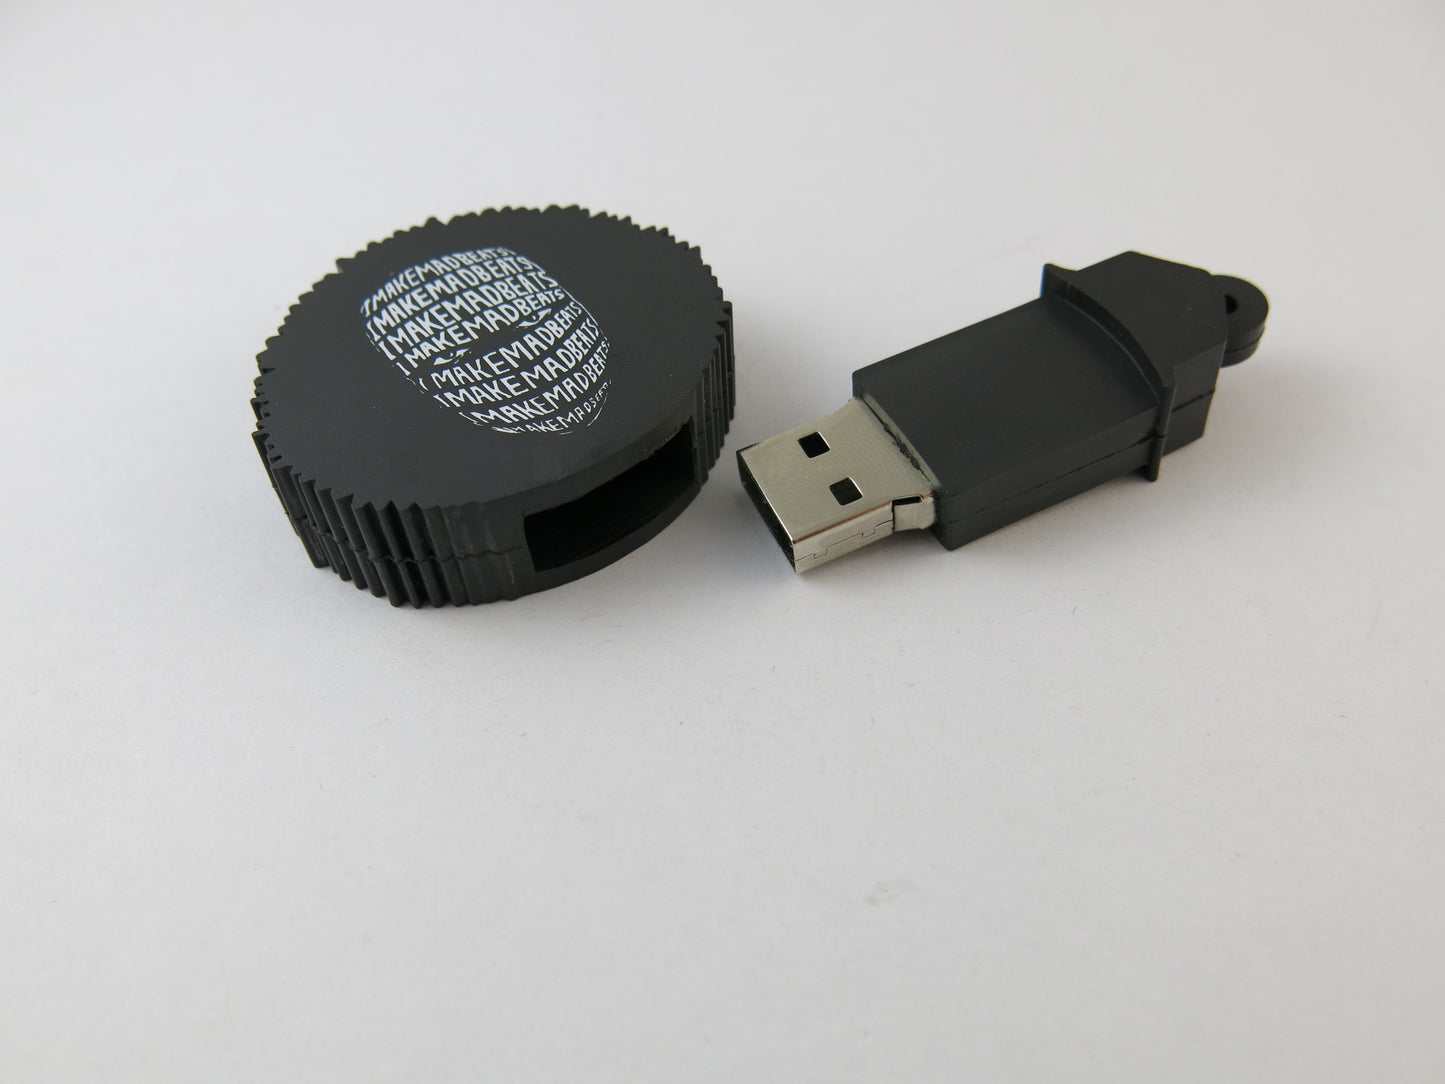 IMAKEMADBEATS - Better Left Unsaid USB Drive